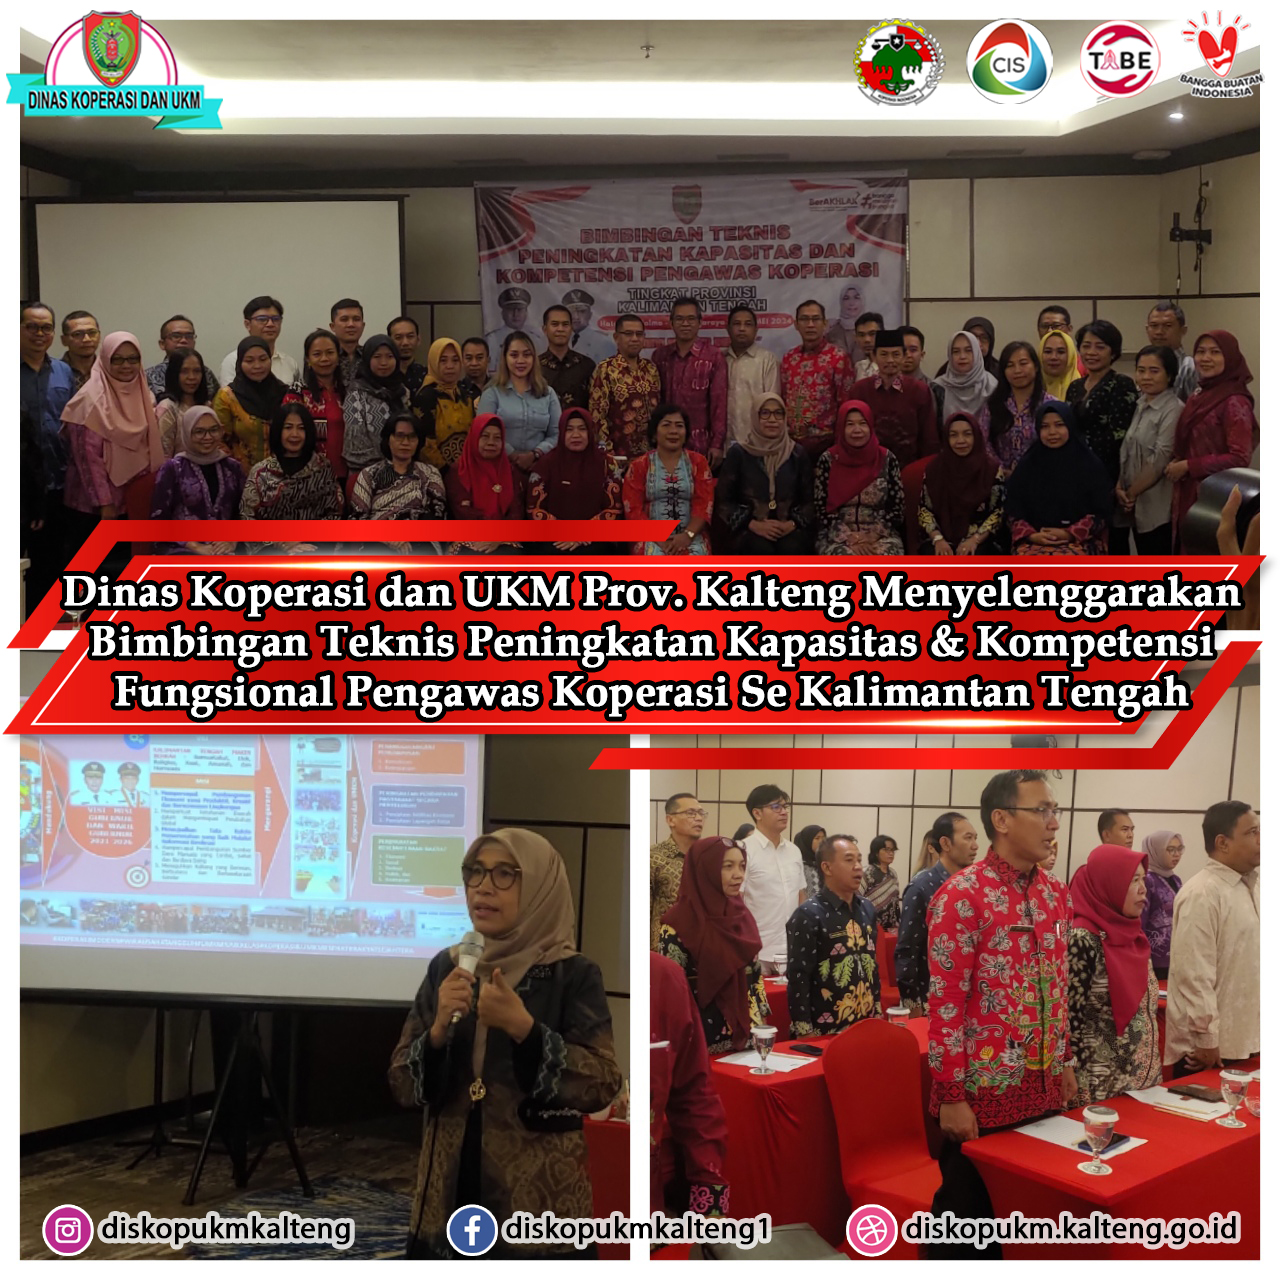 Bimbingan Teknis Peningkatan Kapasitas dan Kompetensi Pejabat Fungsional Pengawas Koperasi se Kalimantan Tengah.